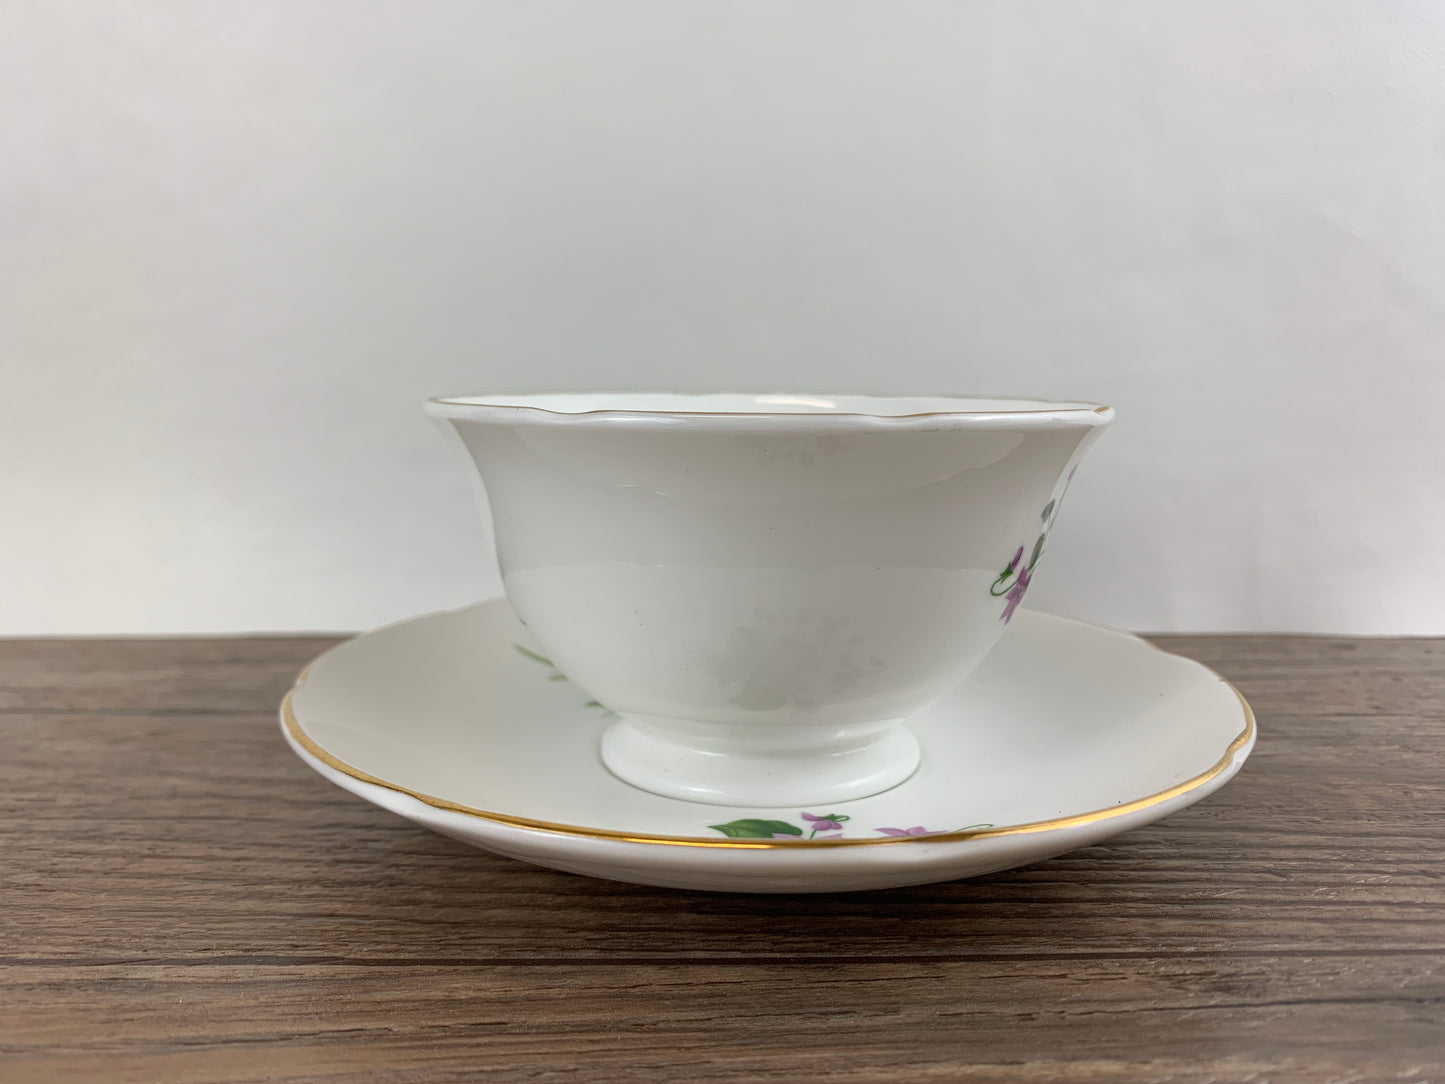 Vintage Tea Cup with Purple Violets, Royal Grafton Teacup